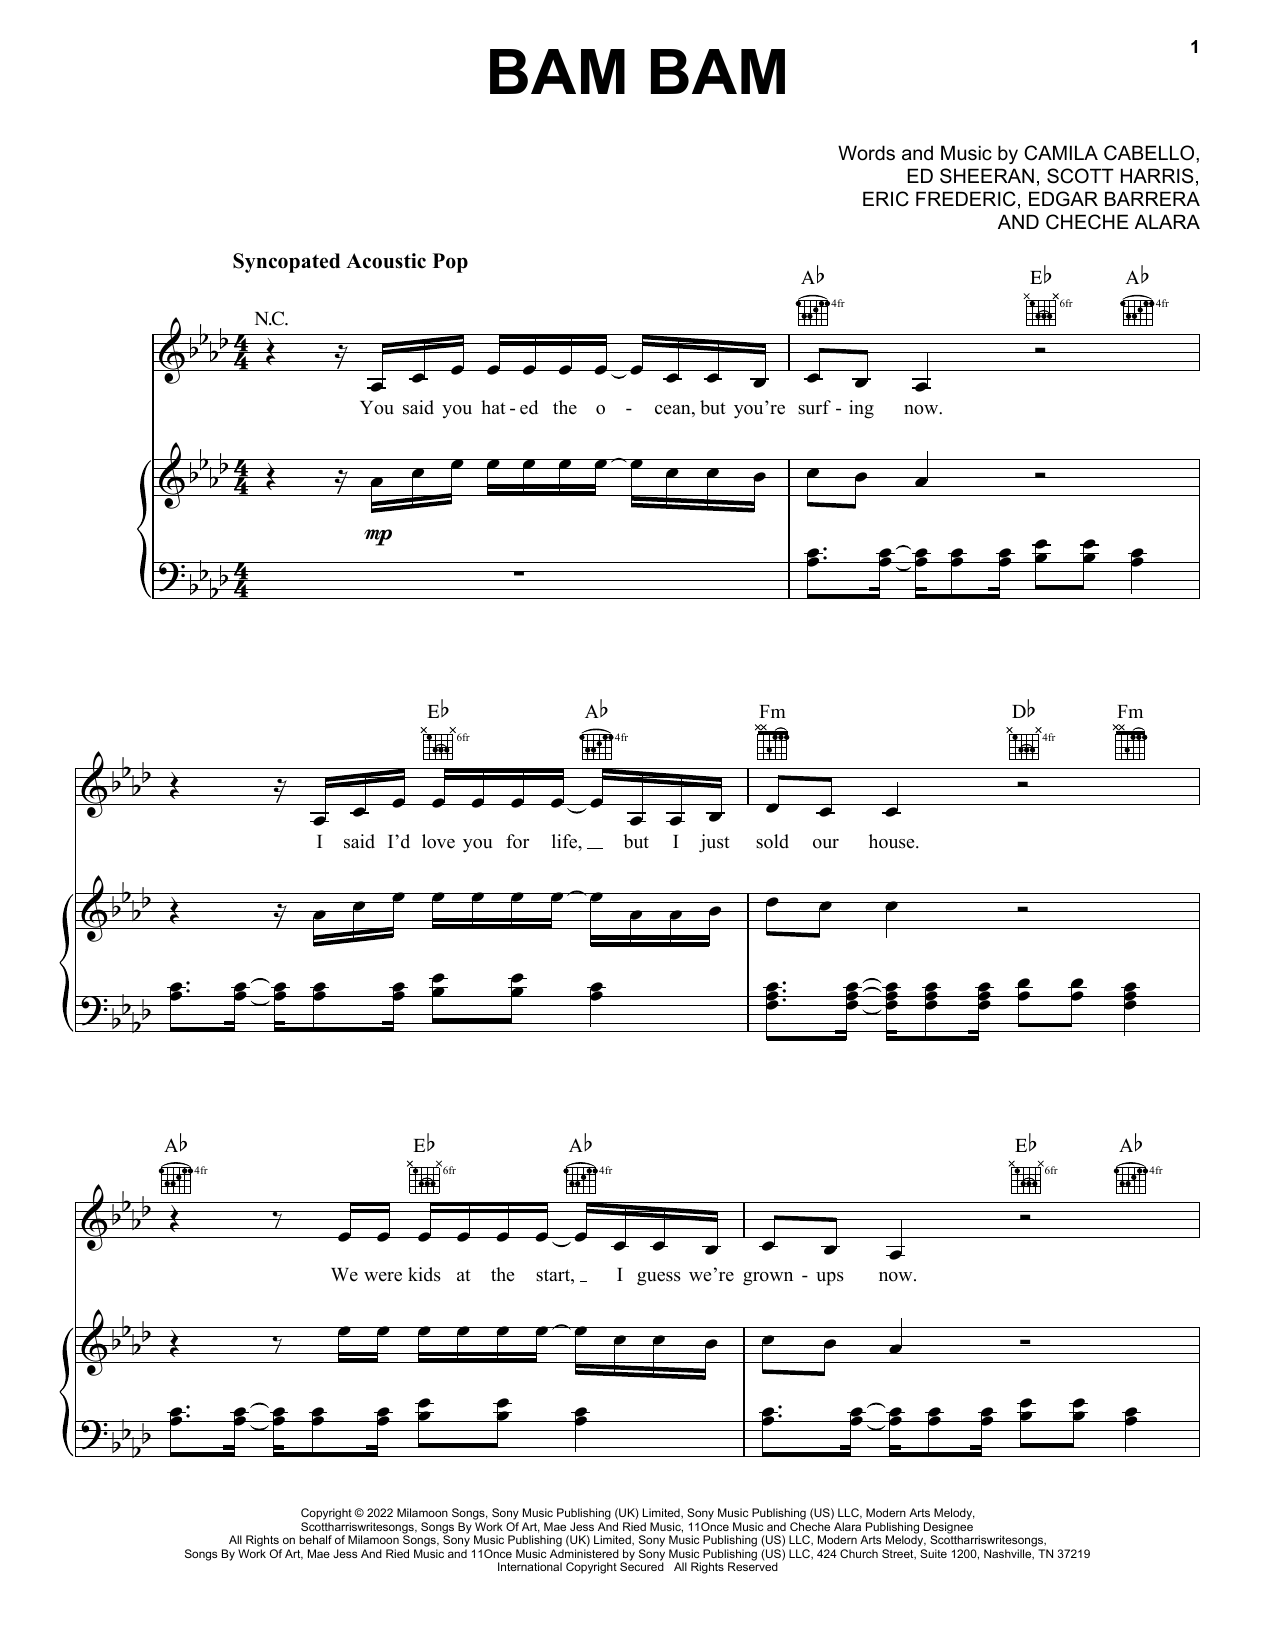 Camila Cabello Bam Bam Sheet Music for Pop Piano, Vocal & Guitar Chords (Right-Hand Melody) including 8 page(s)